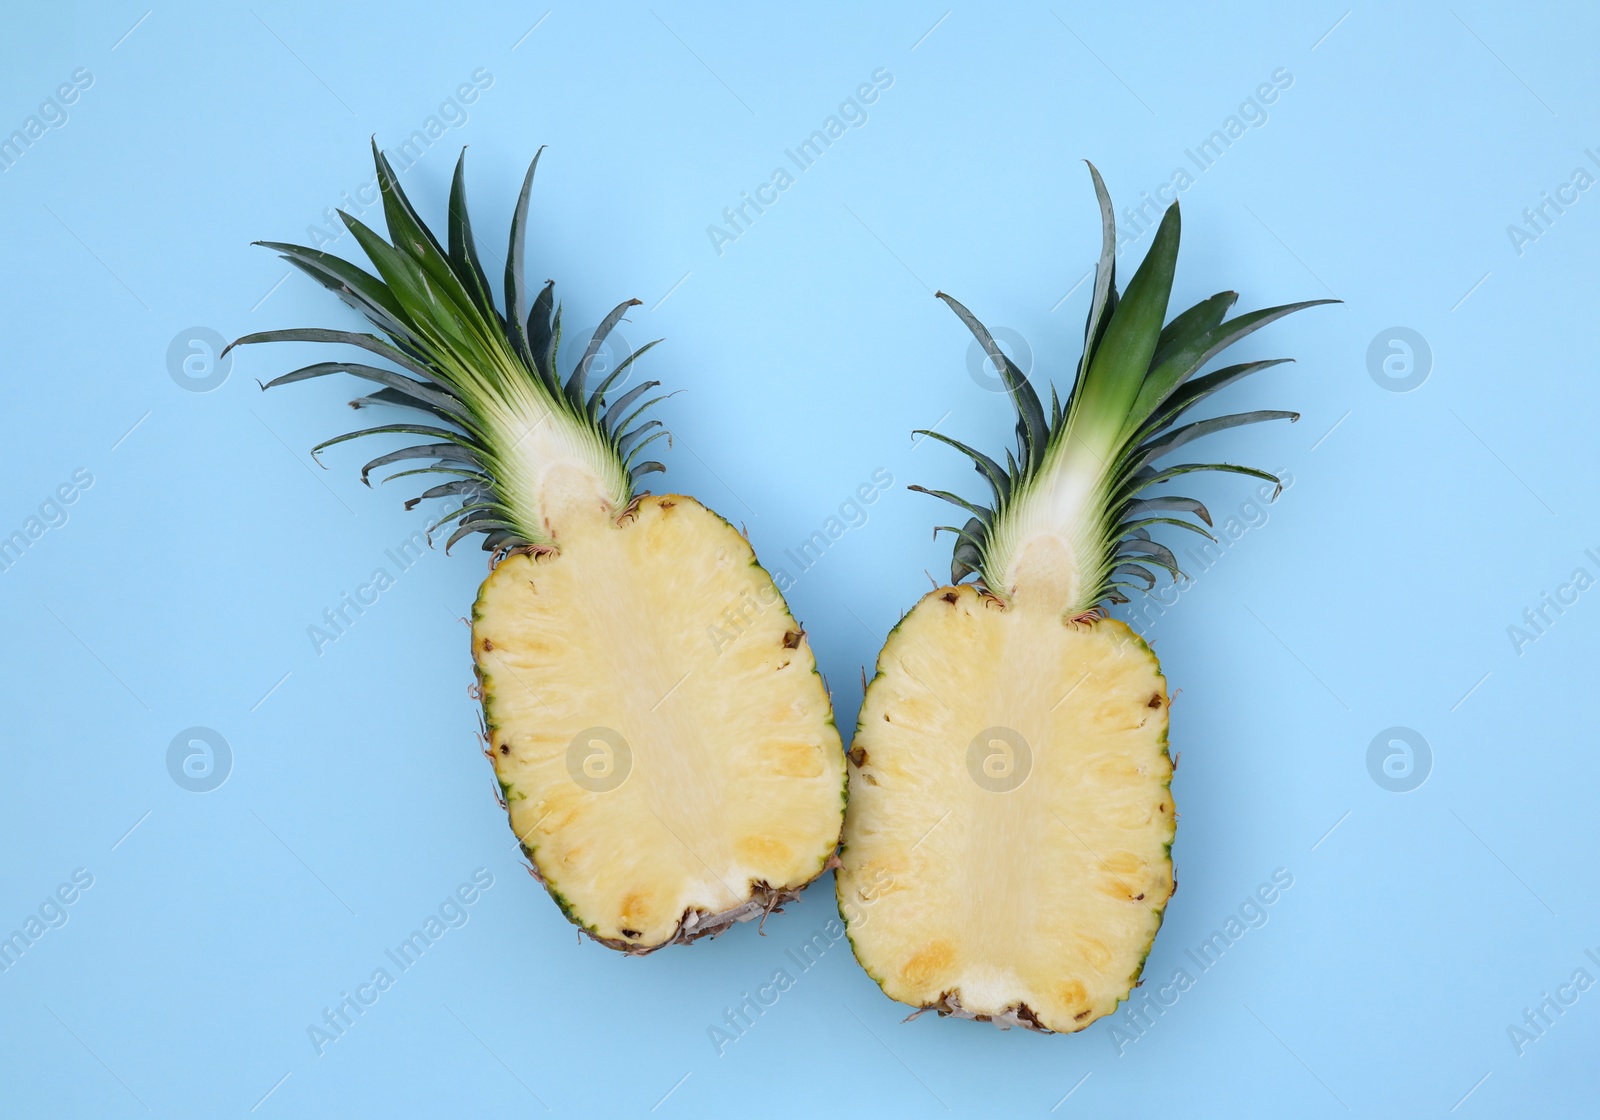 Photo of Halves of ripe pineapple on light blue background, flat lay